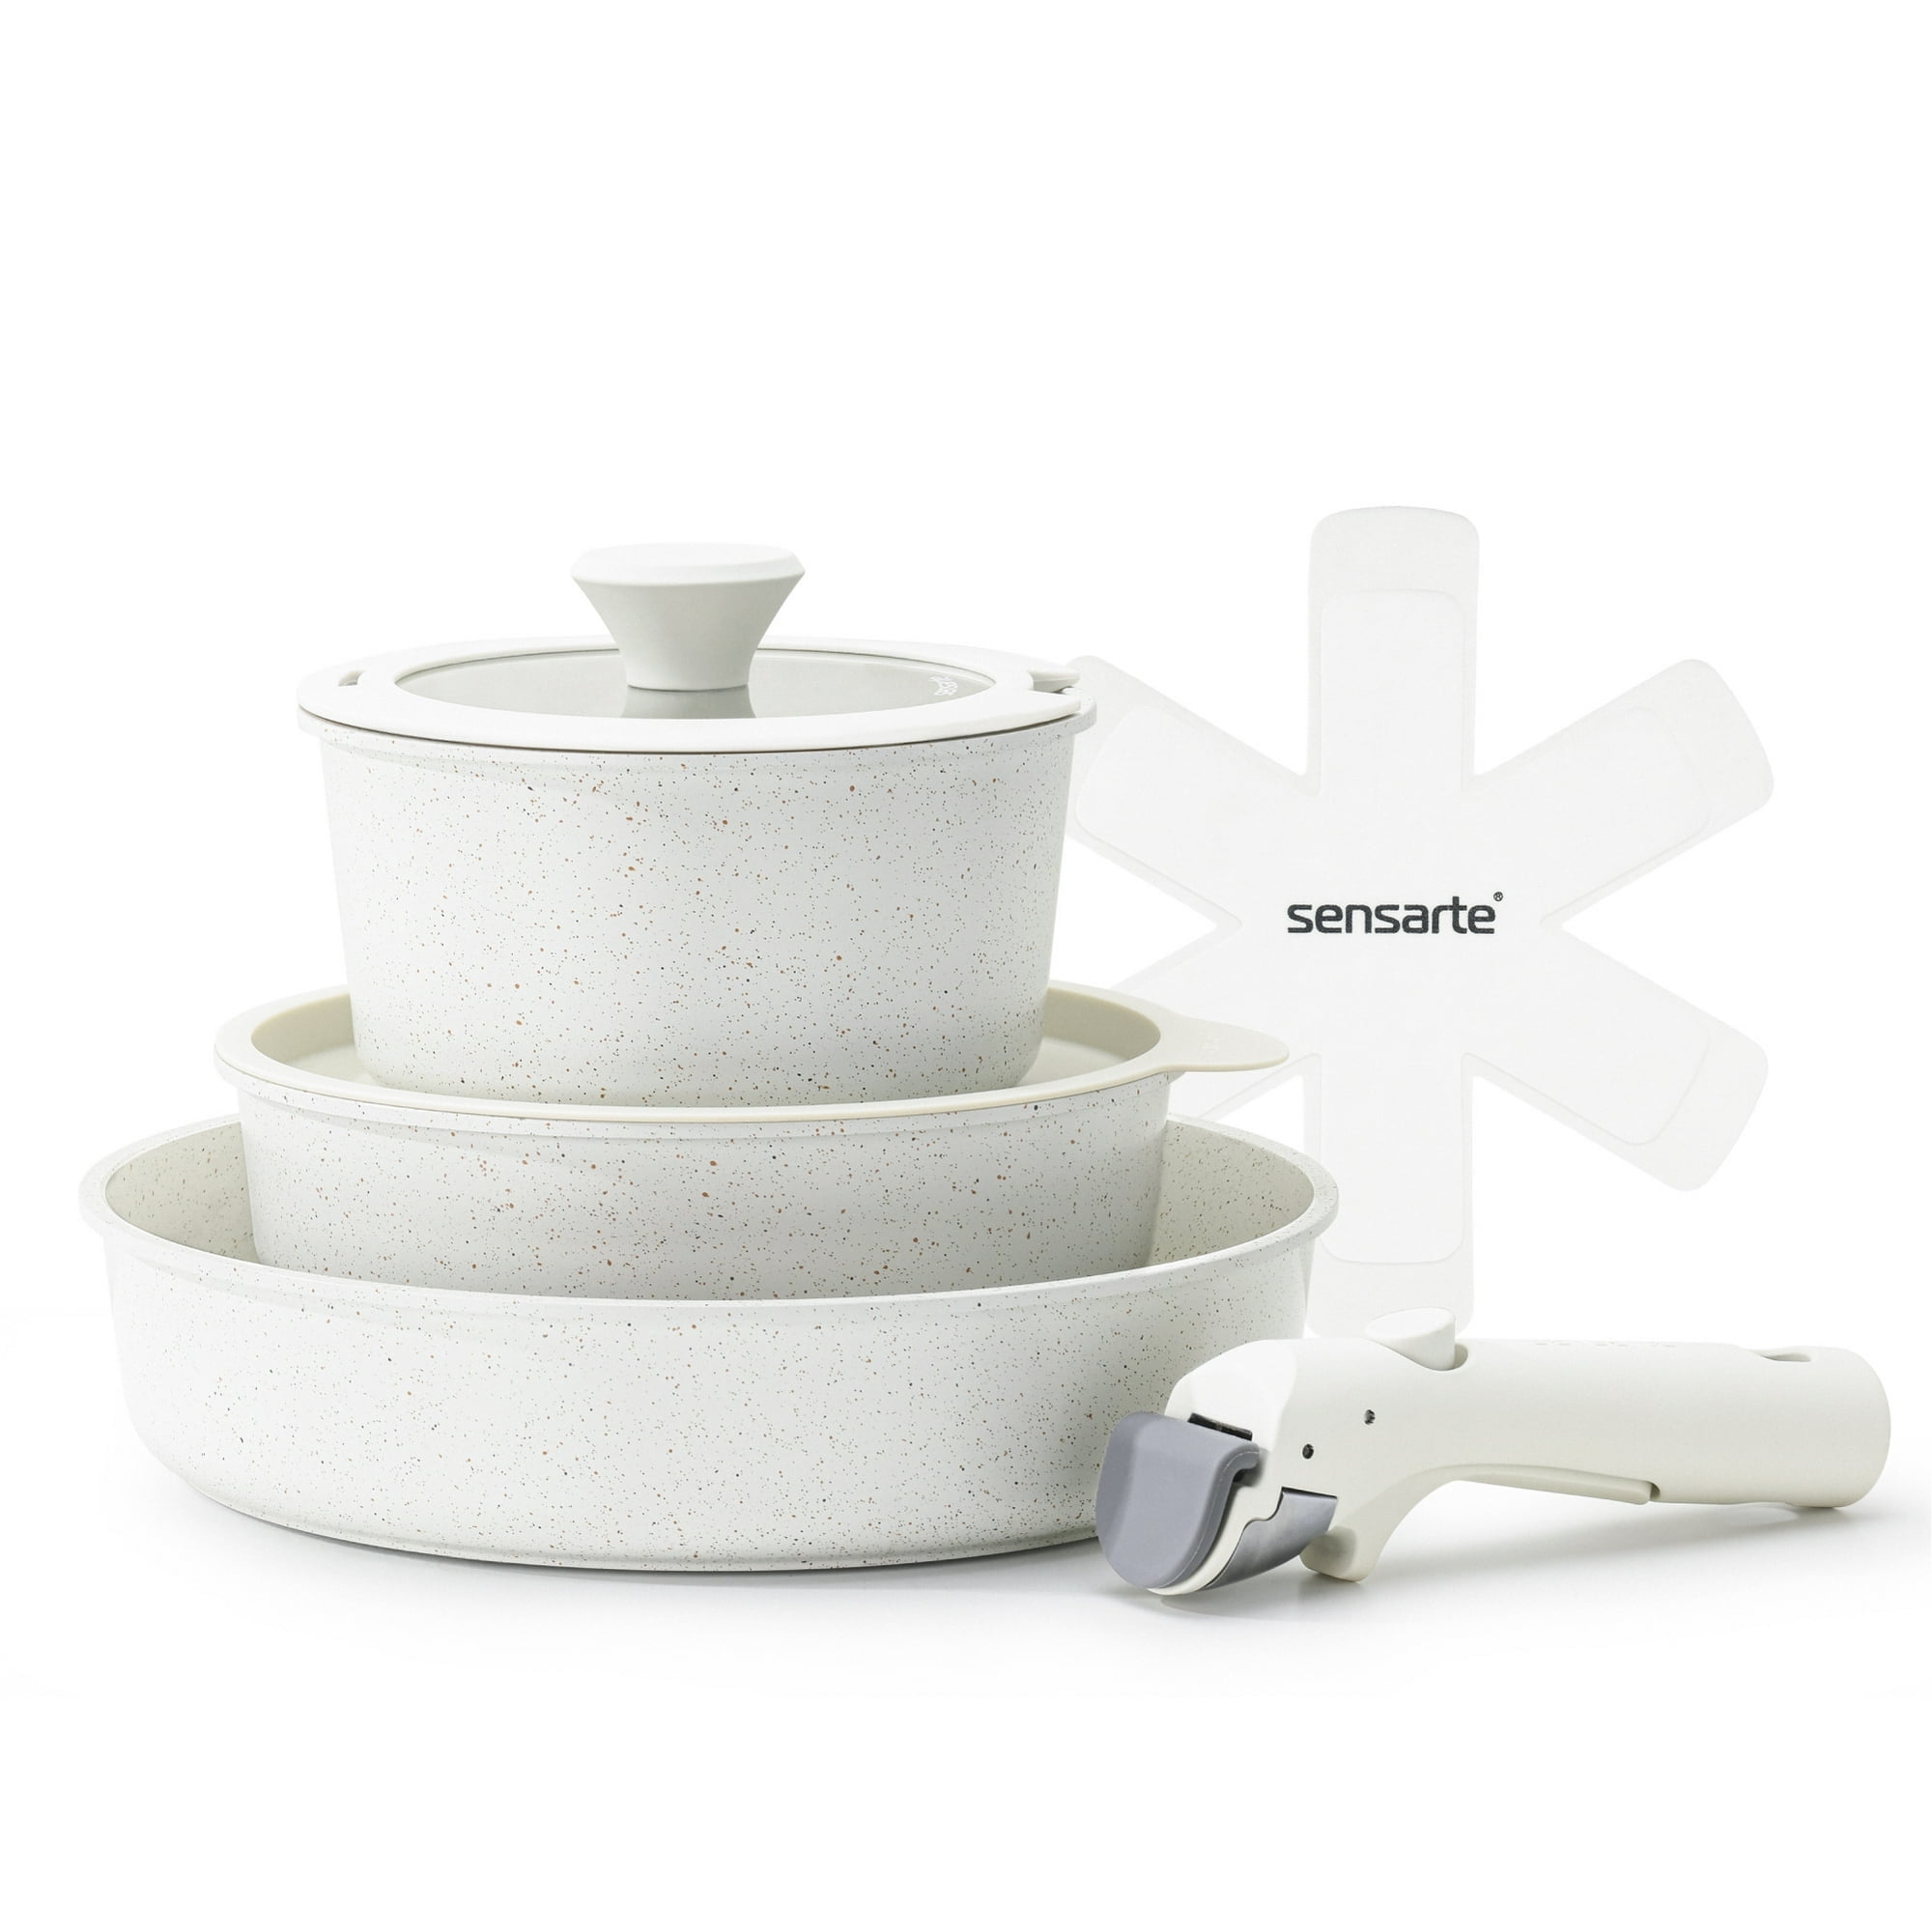  SENSARTE White Ceramic Nonstick Saucepan with Lid 1.5